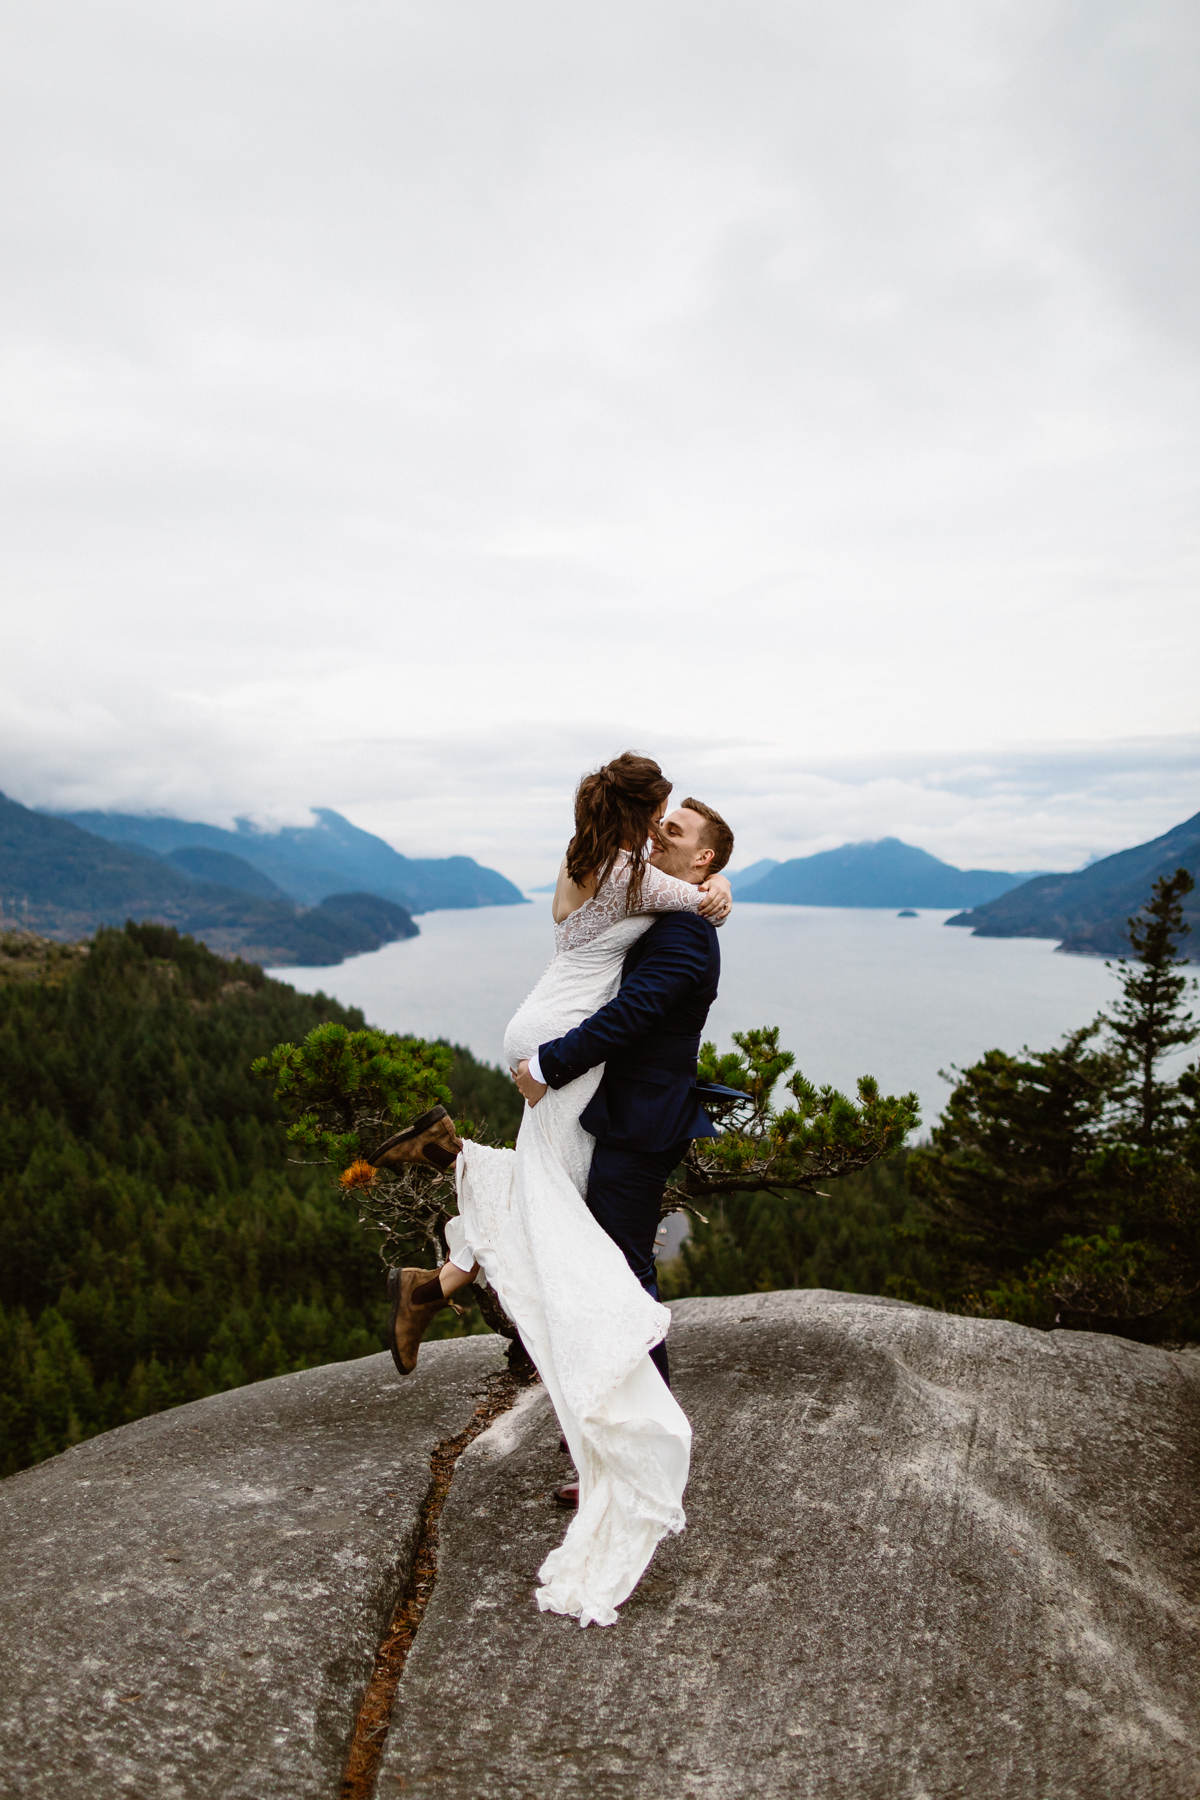 Squamish Wedding Photographers at an Adventurous Elopement - Image 39